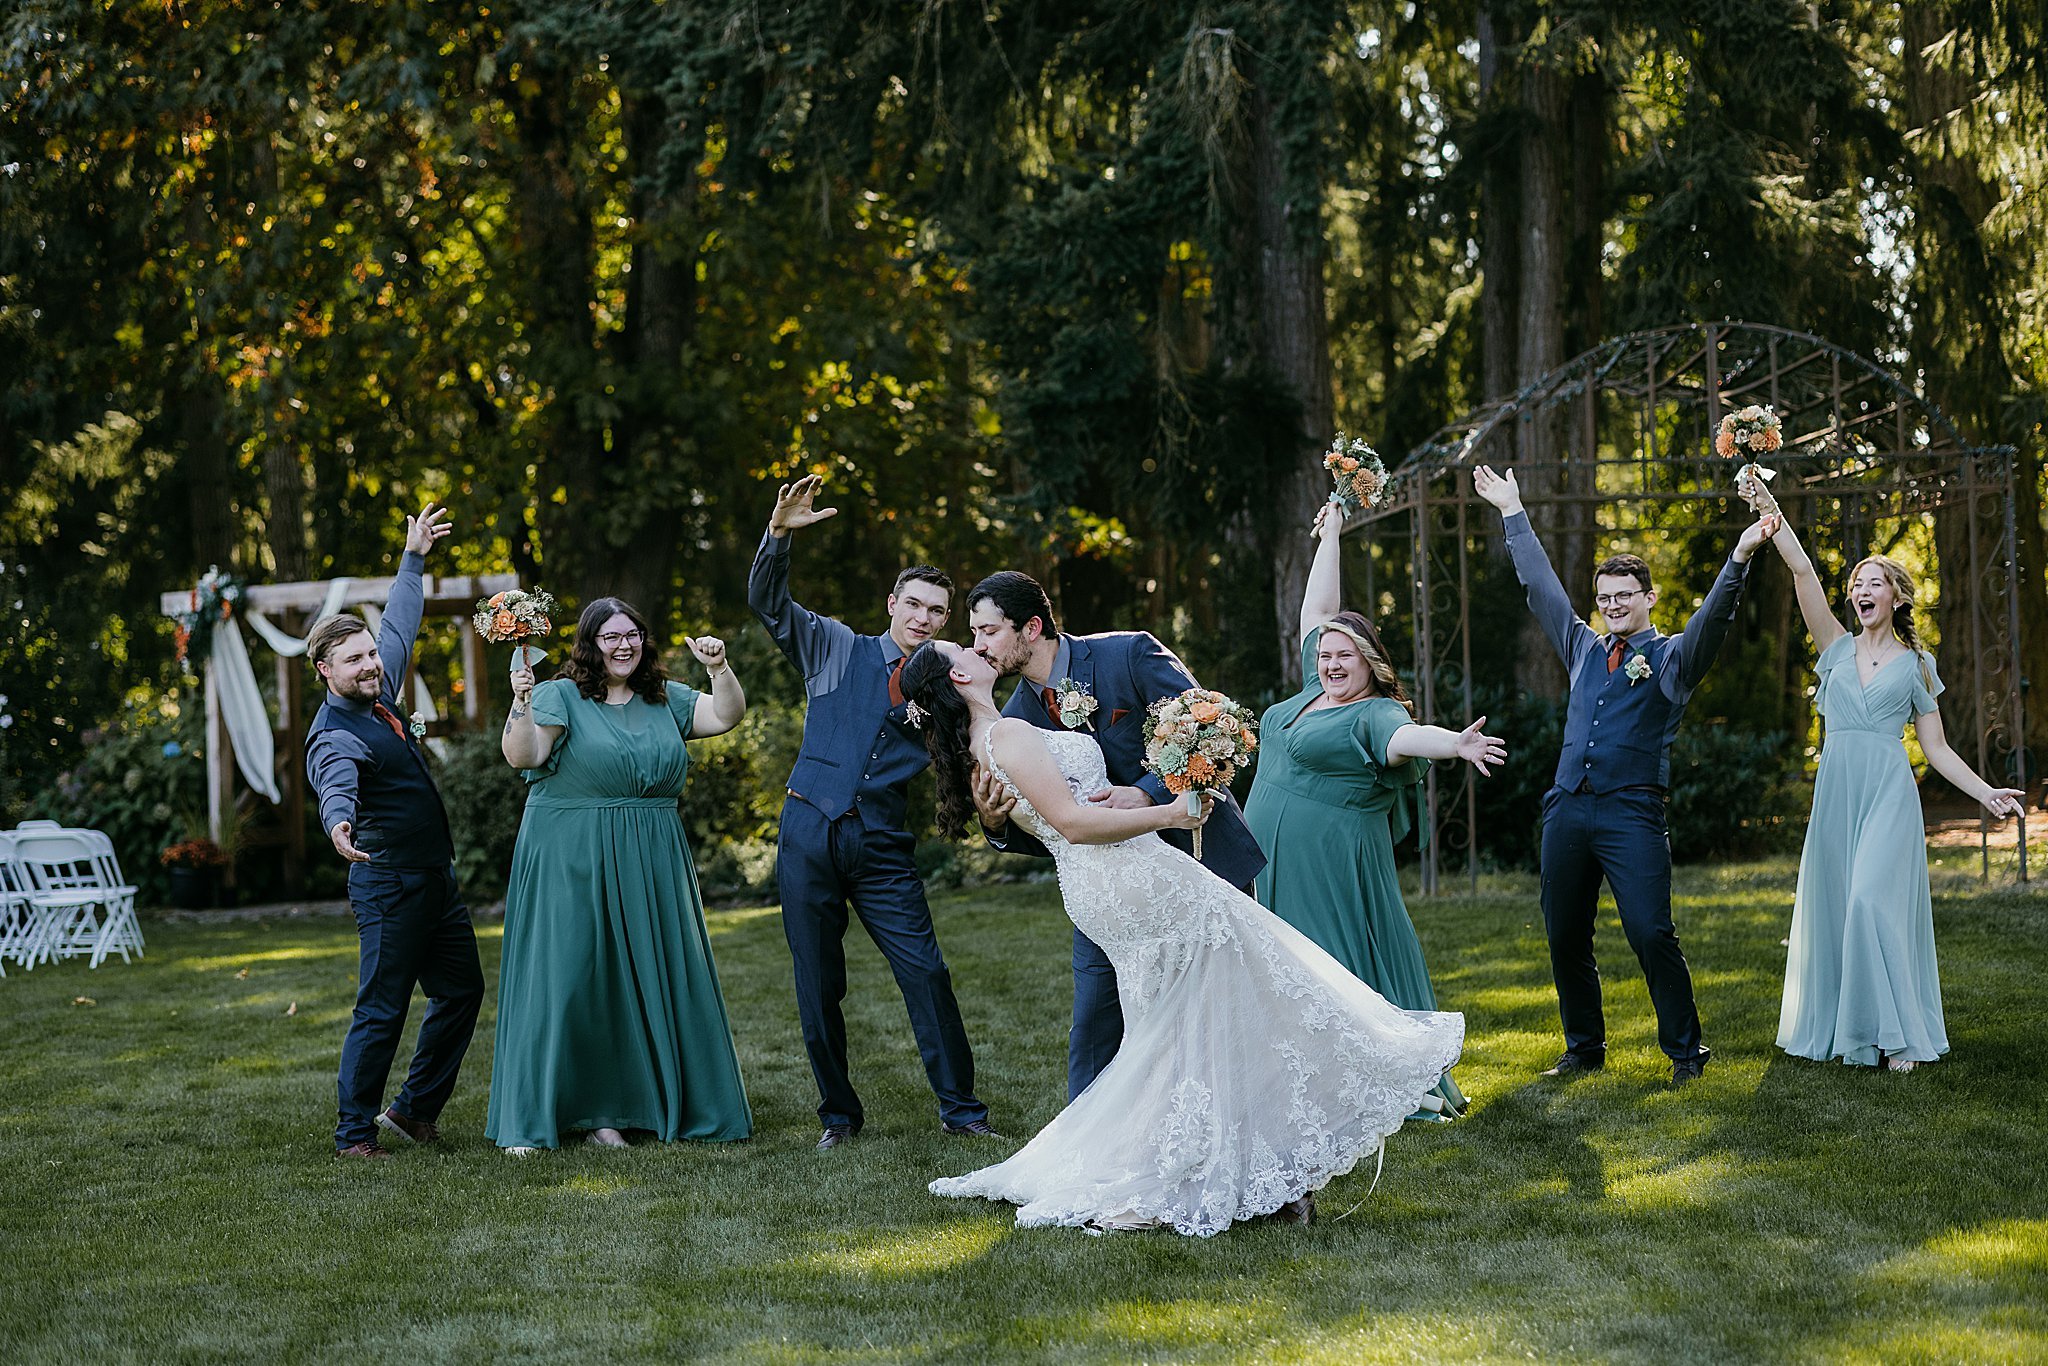 withstylePhotography_Oregon city Photographer_ Portland wedding photographer_Vanderbeck vally farms wedding_Oregon elopment Photographer0028.jpg